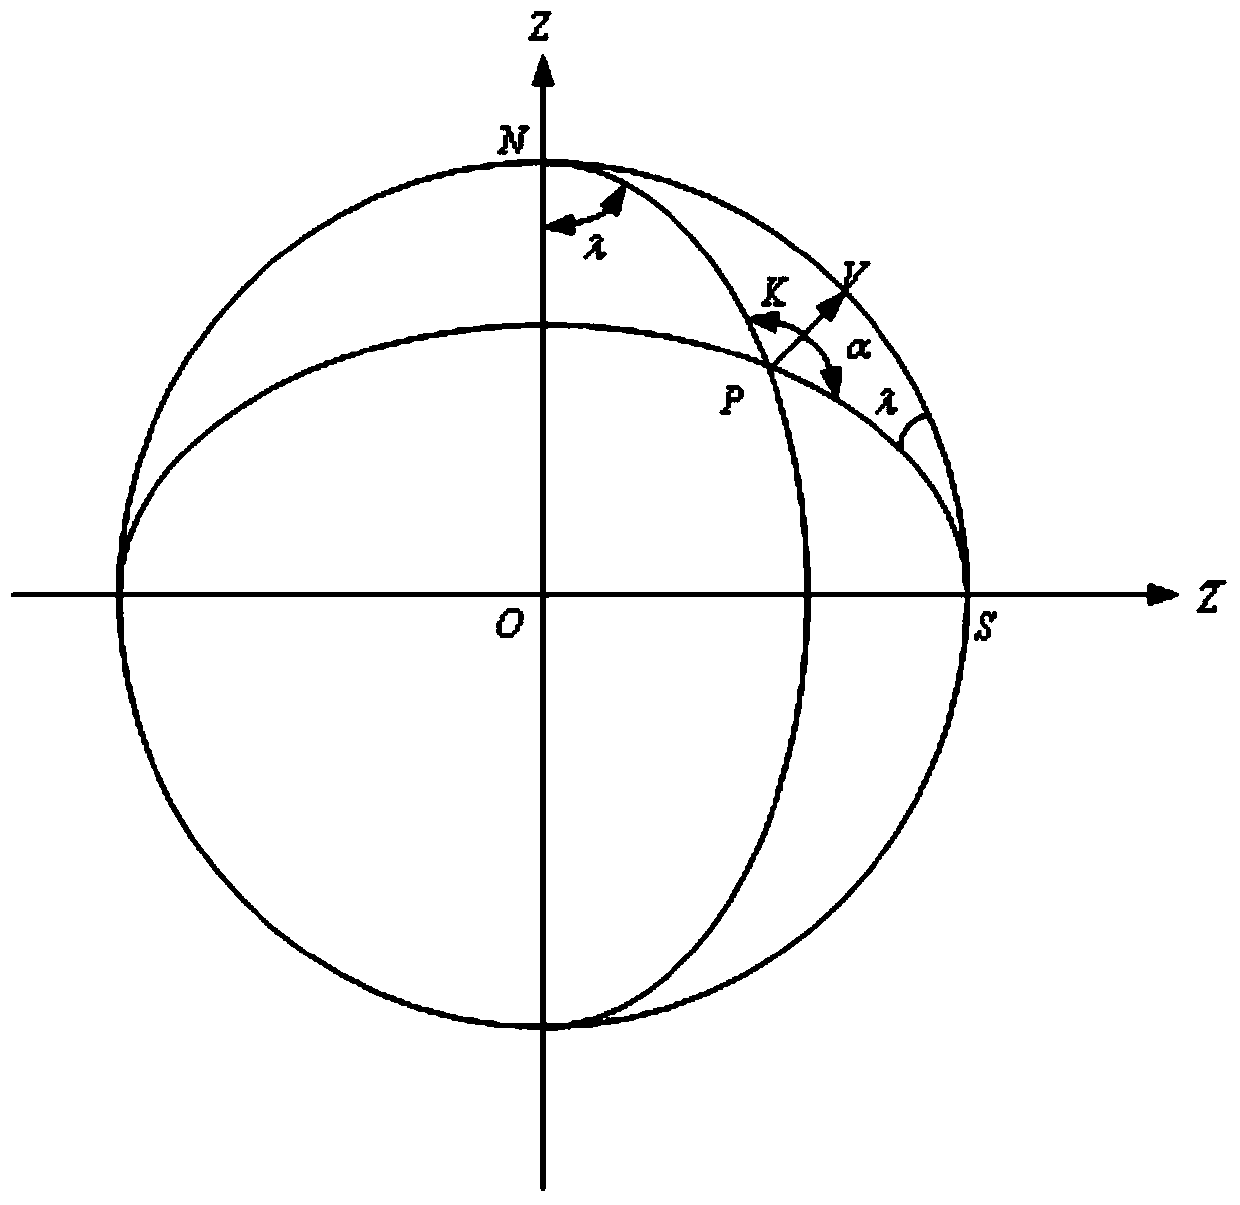 Transfer alignment method in polar region based on inverse coordinate system